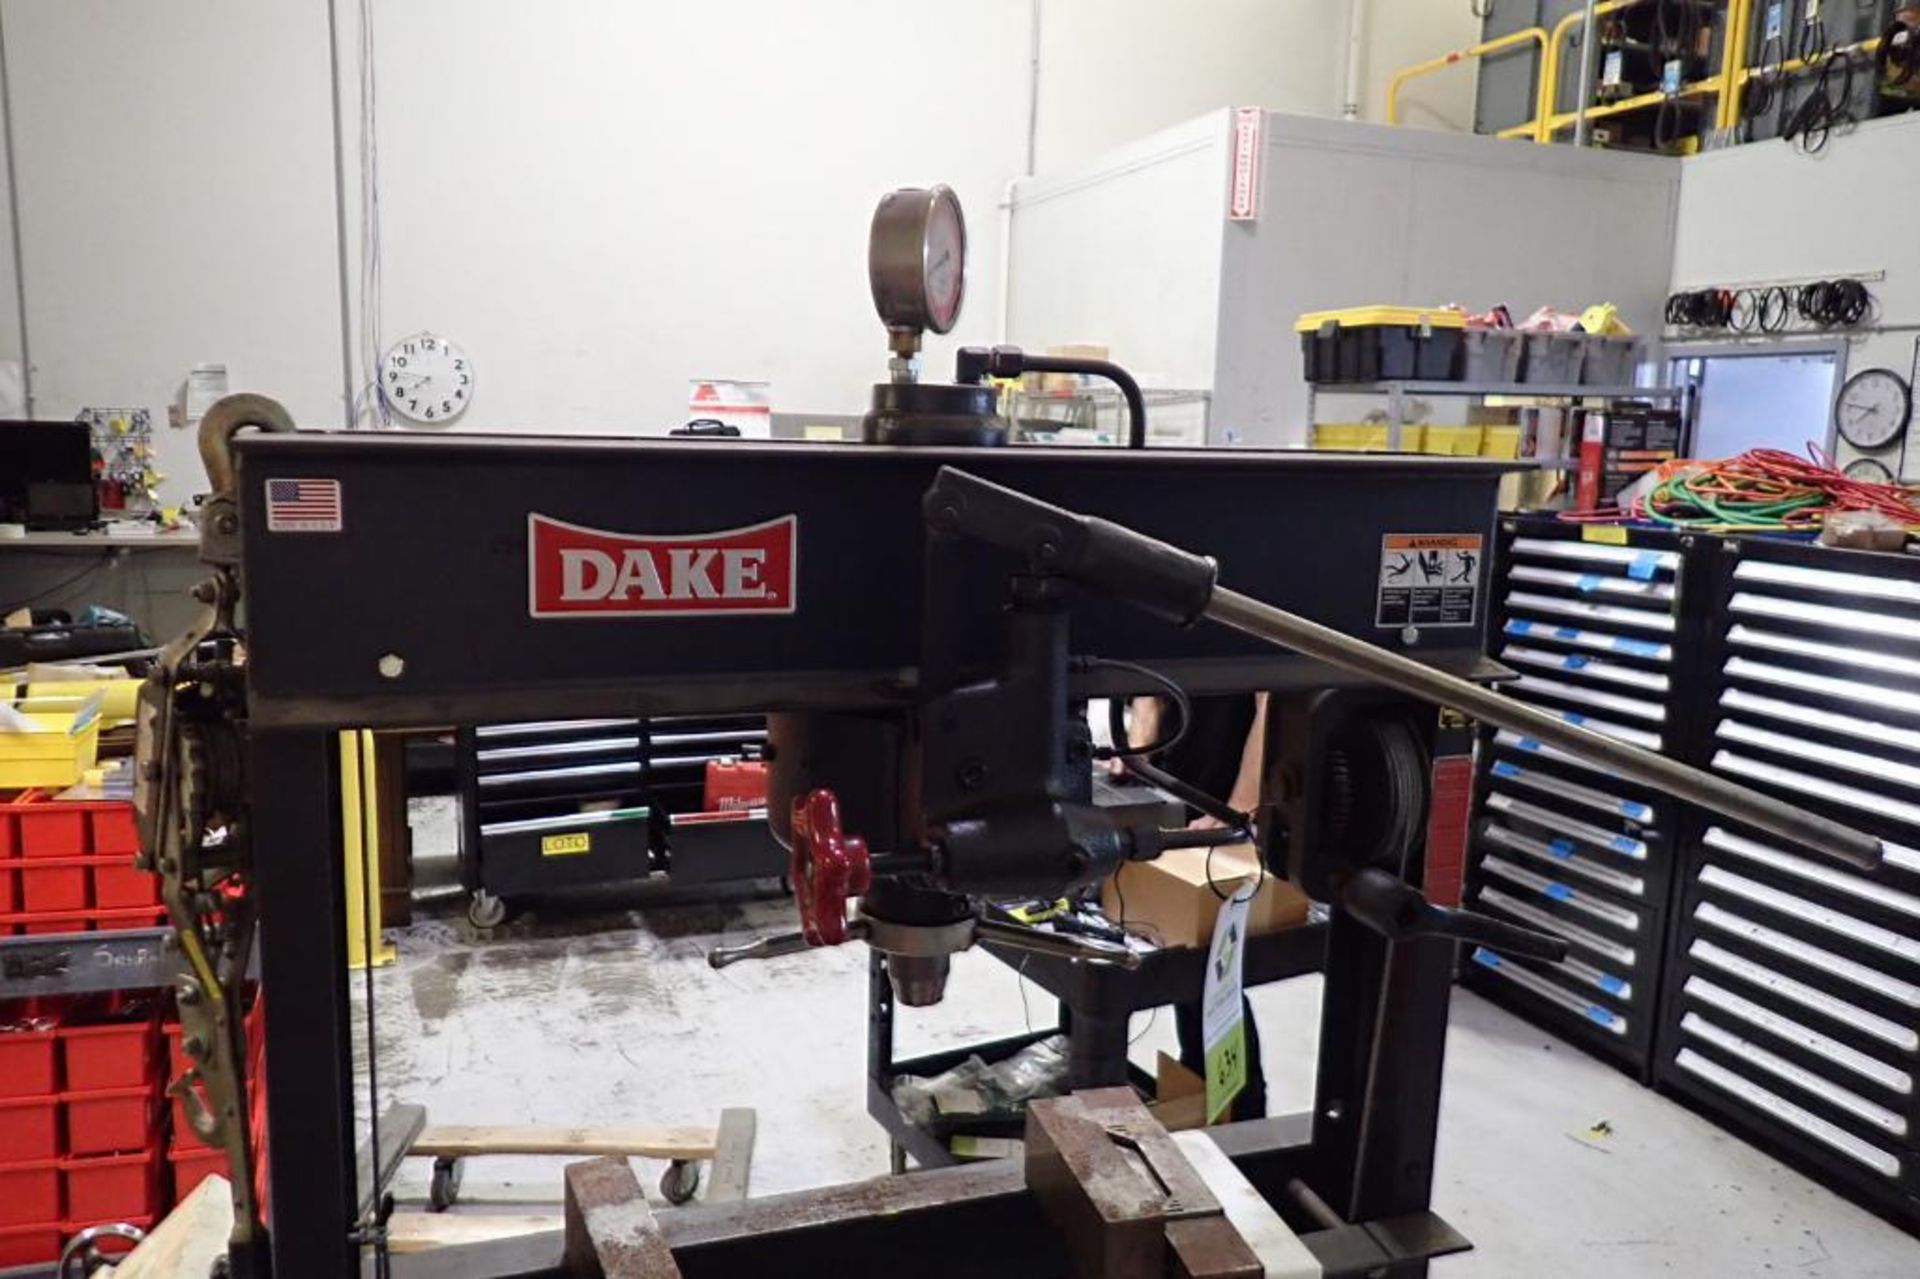 Dake hydraulic hand press, Model 907001, SN 1336394, made in the USA - ** Rigging Fee: $ 75 ** - Image 5 of 9